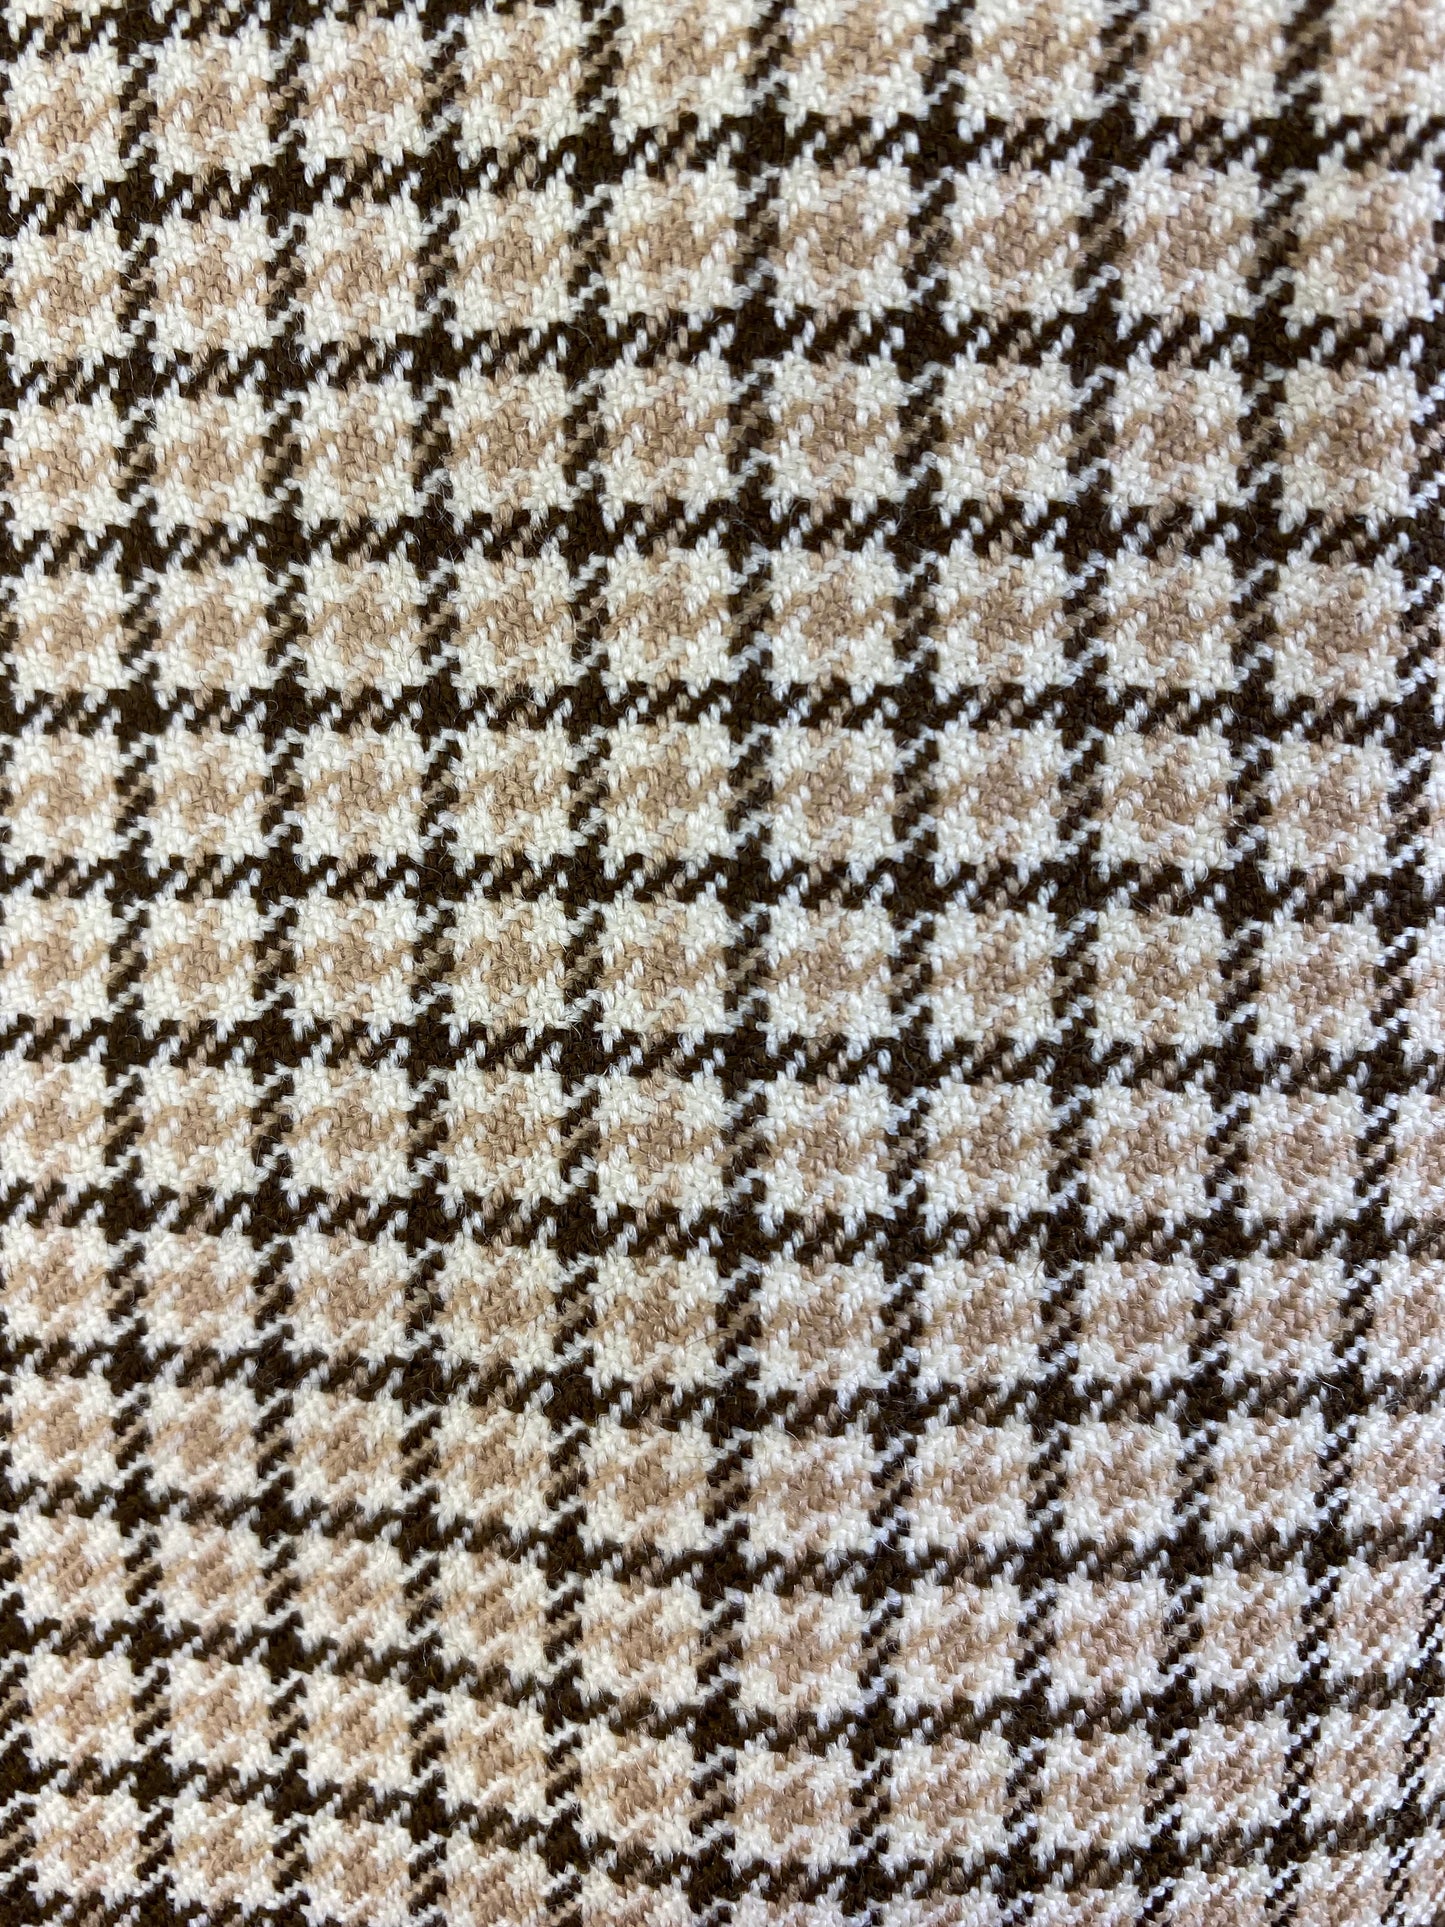 1970s Vintage Deadstock Men's Wool Suit, Beige/ Brown Tattersal 3-Piece Suit, Allan Manett, NOS, C44